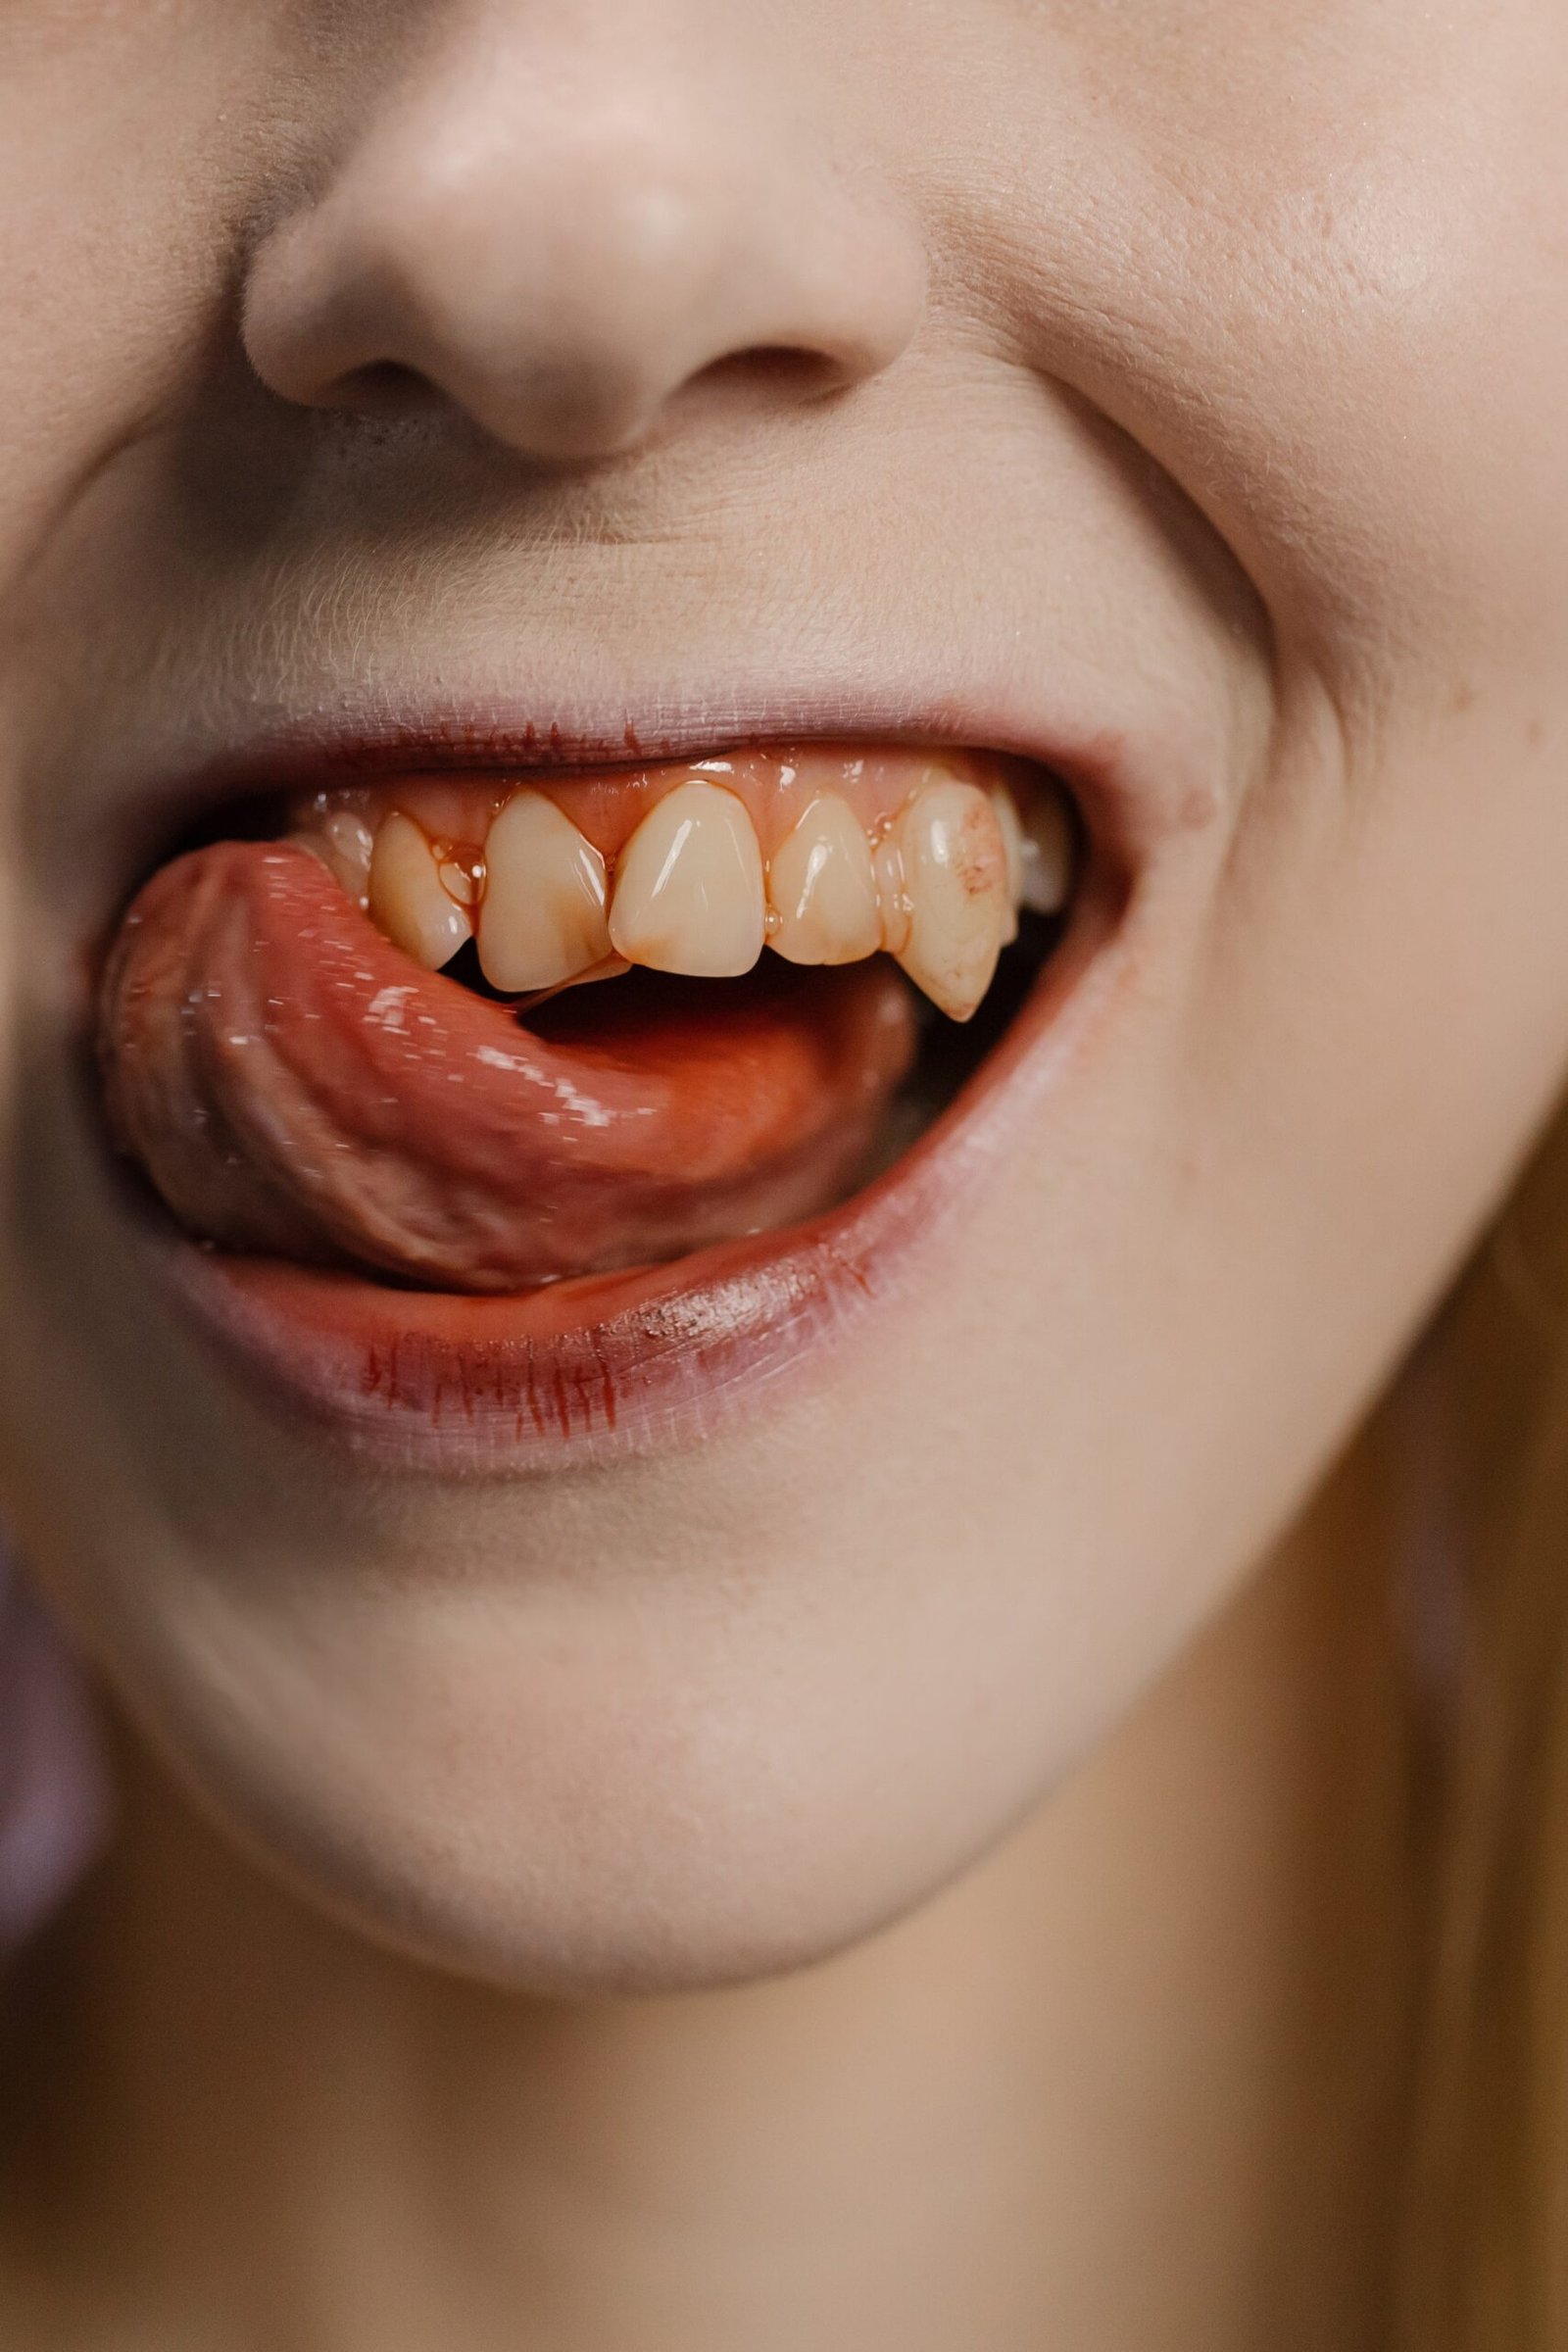 A vampire licking its lips